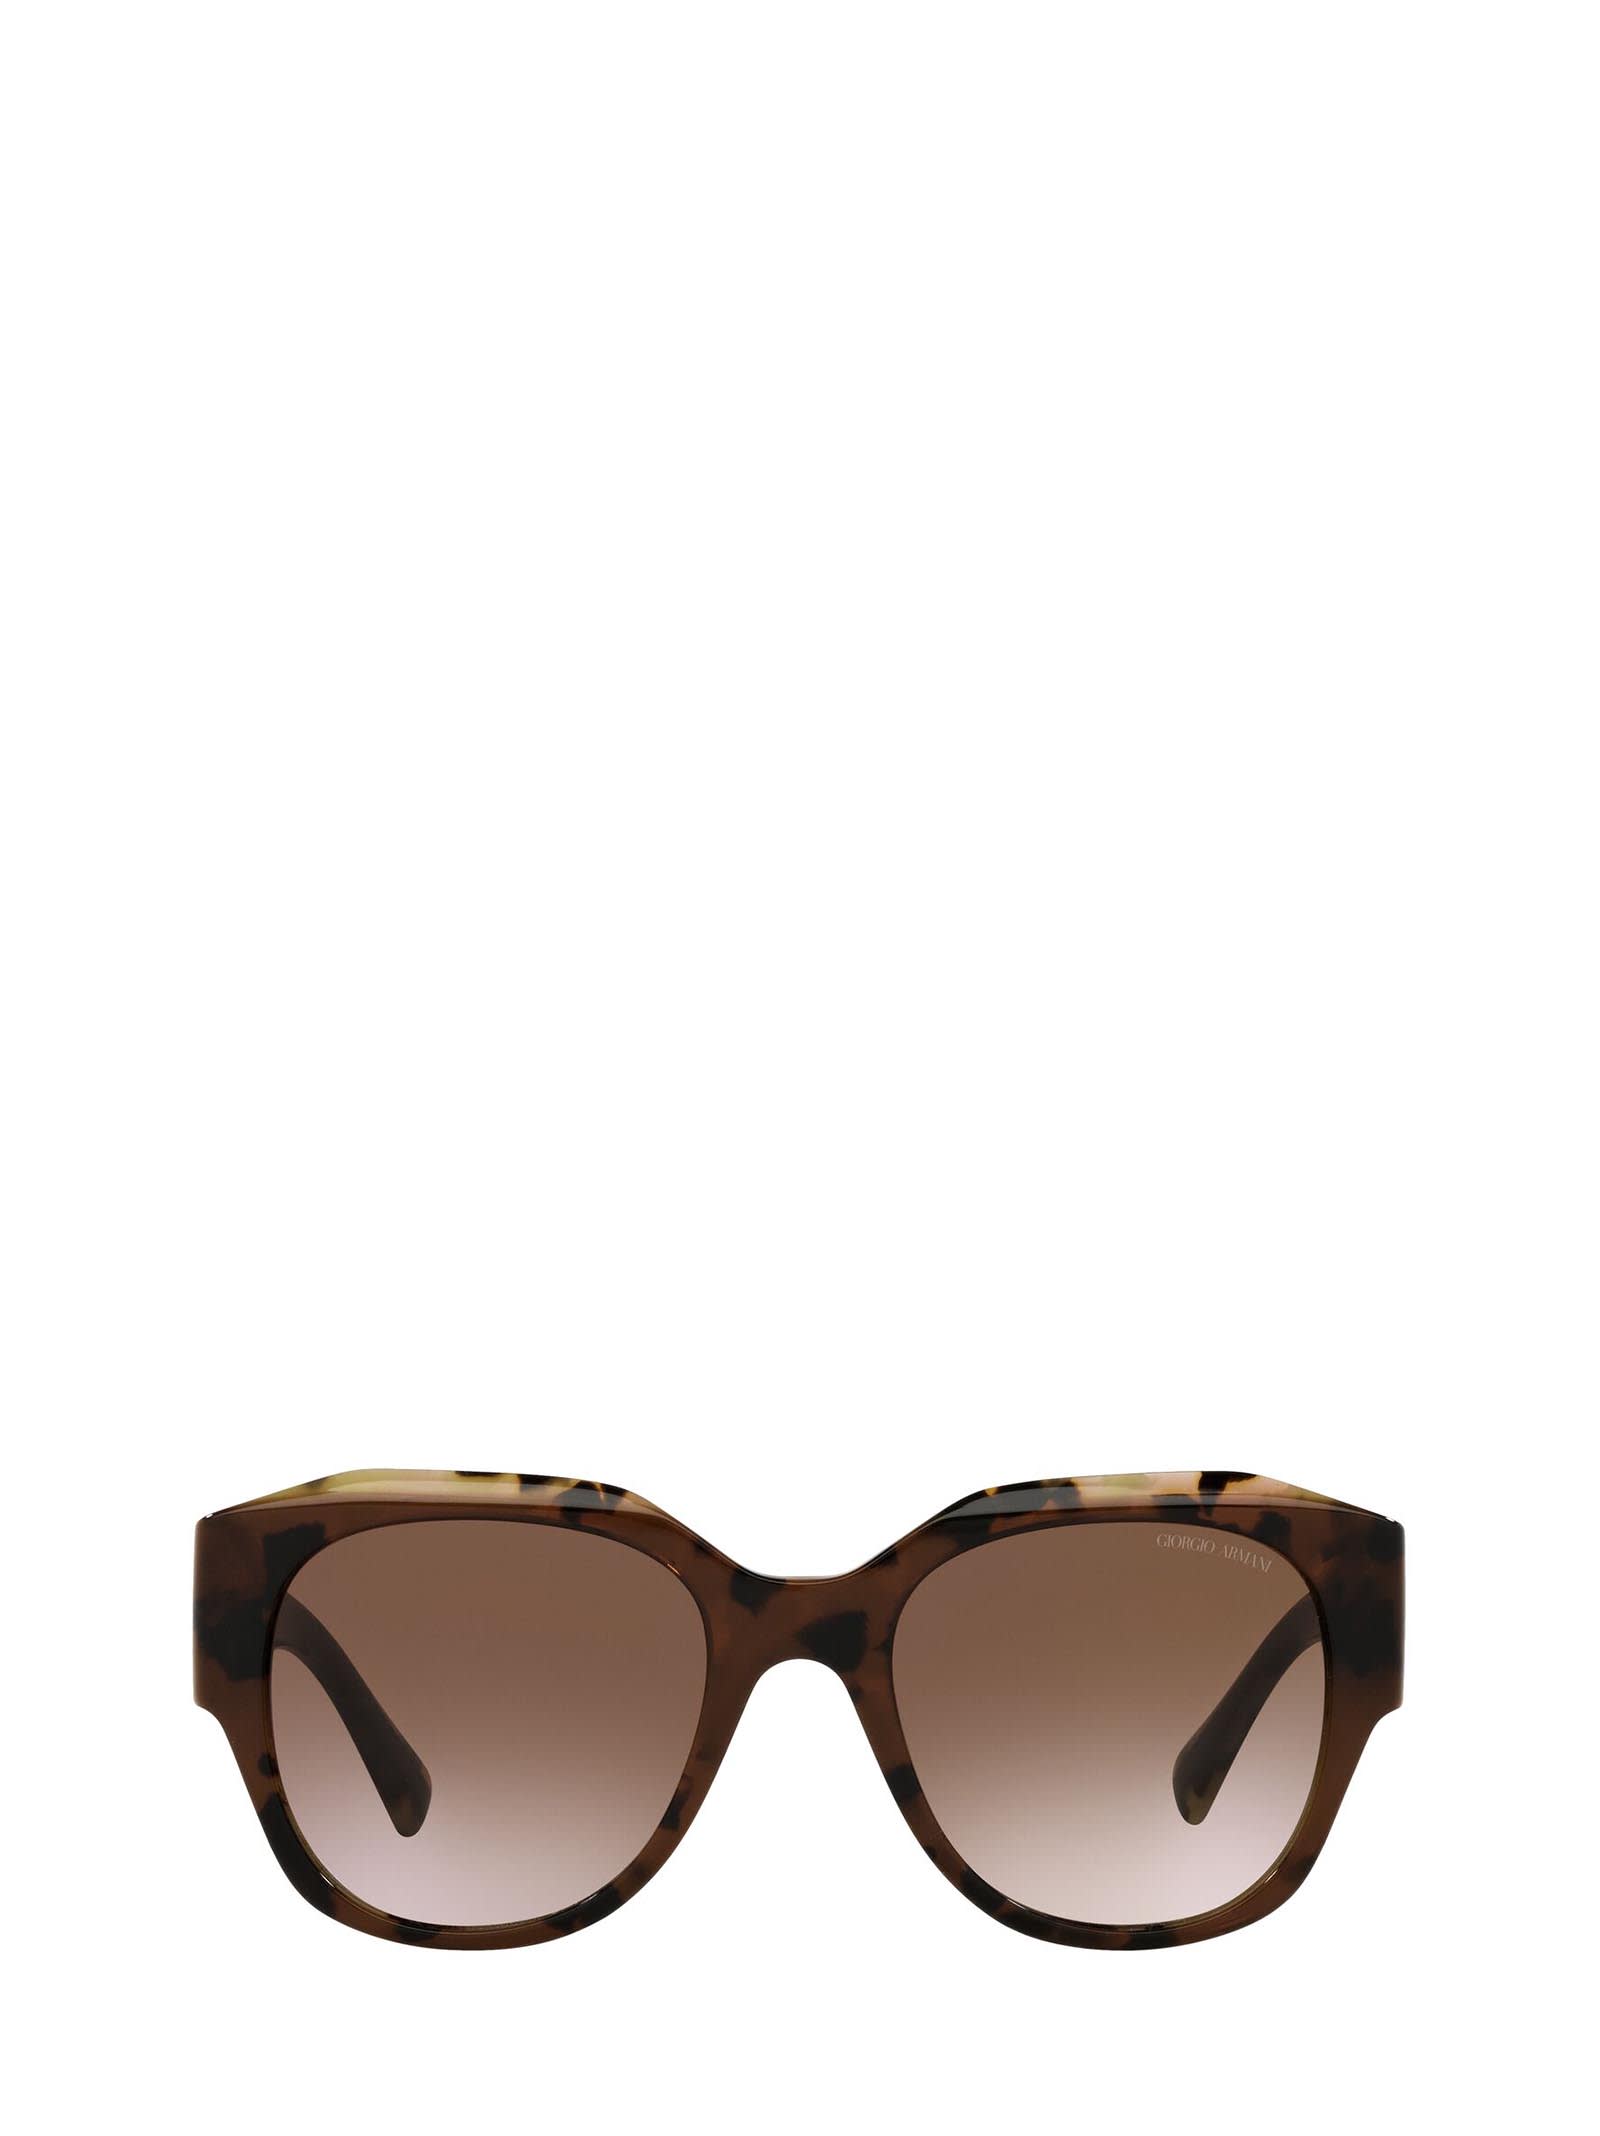 Giorgio Armani Giorgio Armani Ar8140 Brown Tortoise Sunglasses